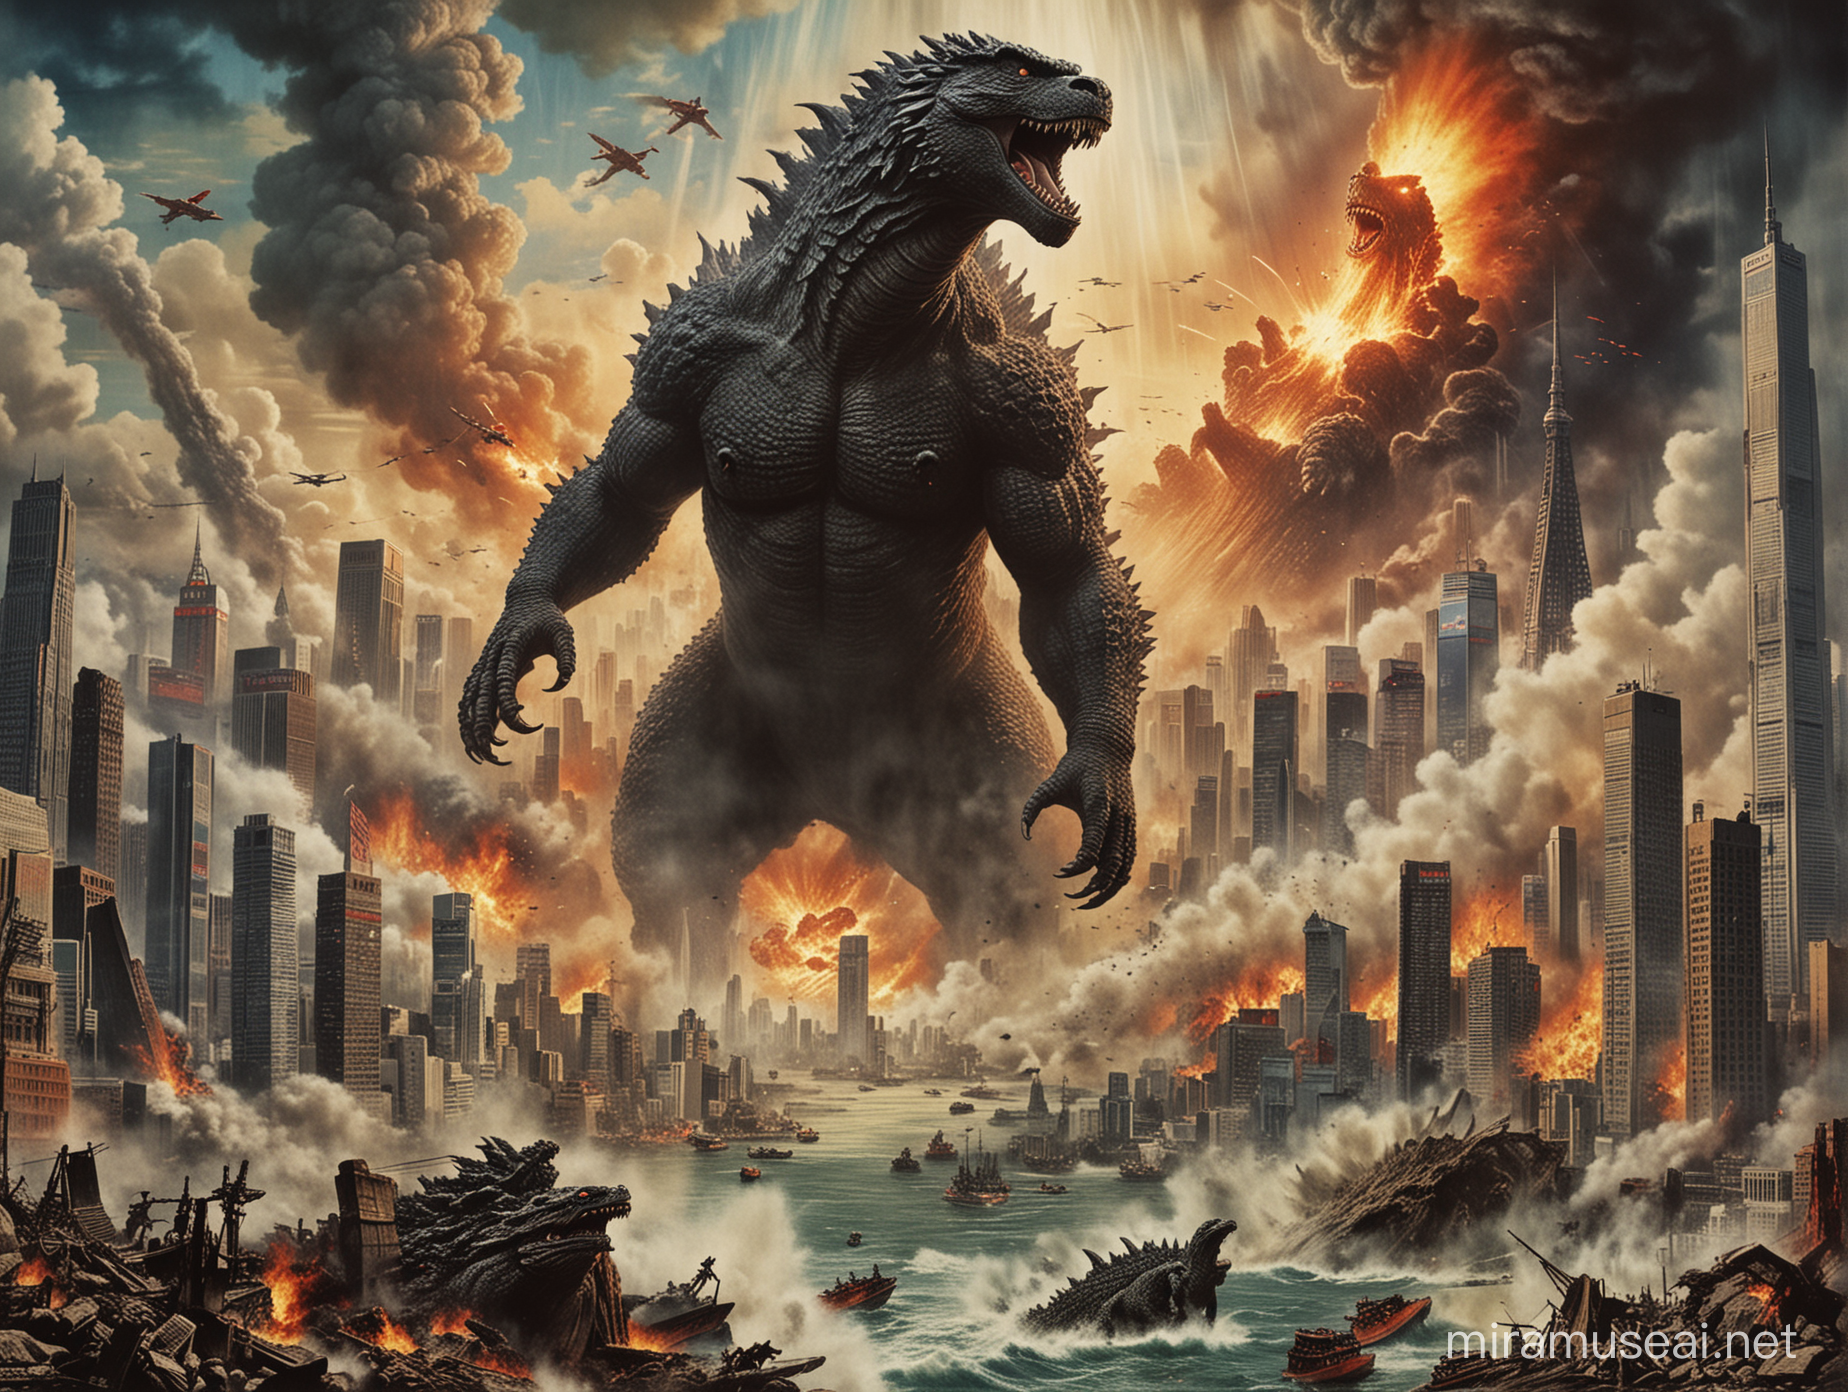 Movie poster of Godzilla destroying tokyo over japan